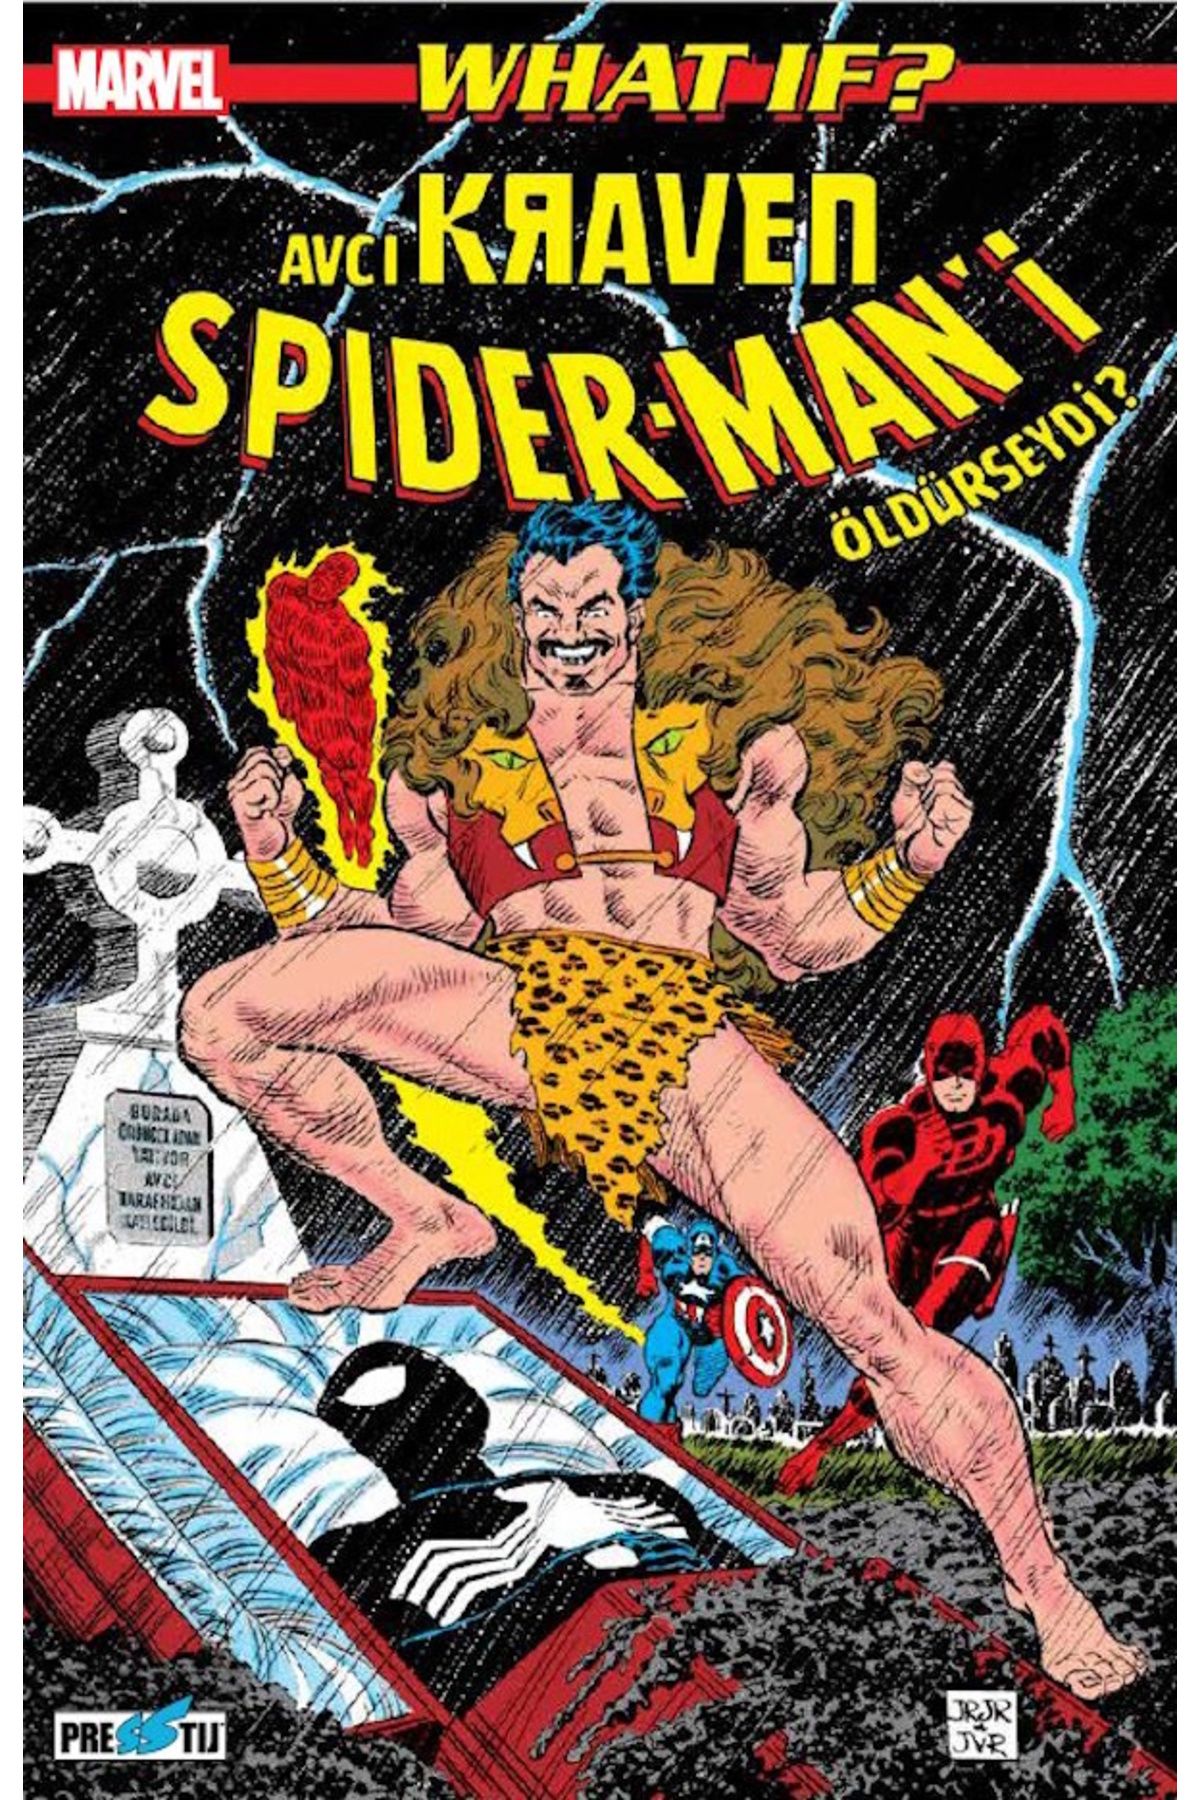 MARVEL What if? Avcı Kraven Spider-Man'i Öldürseydi